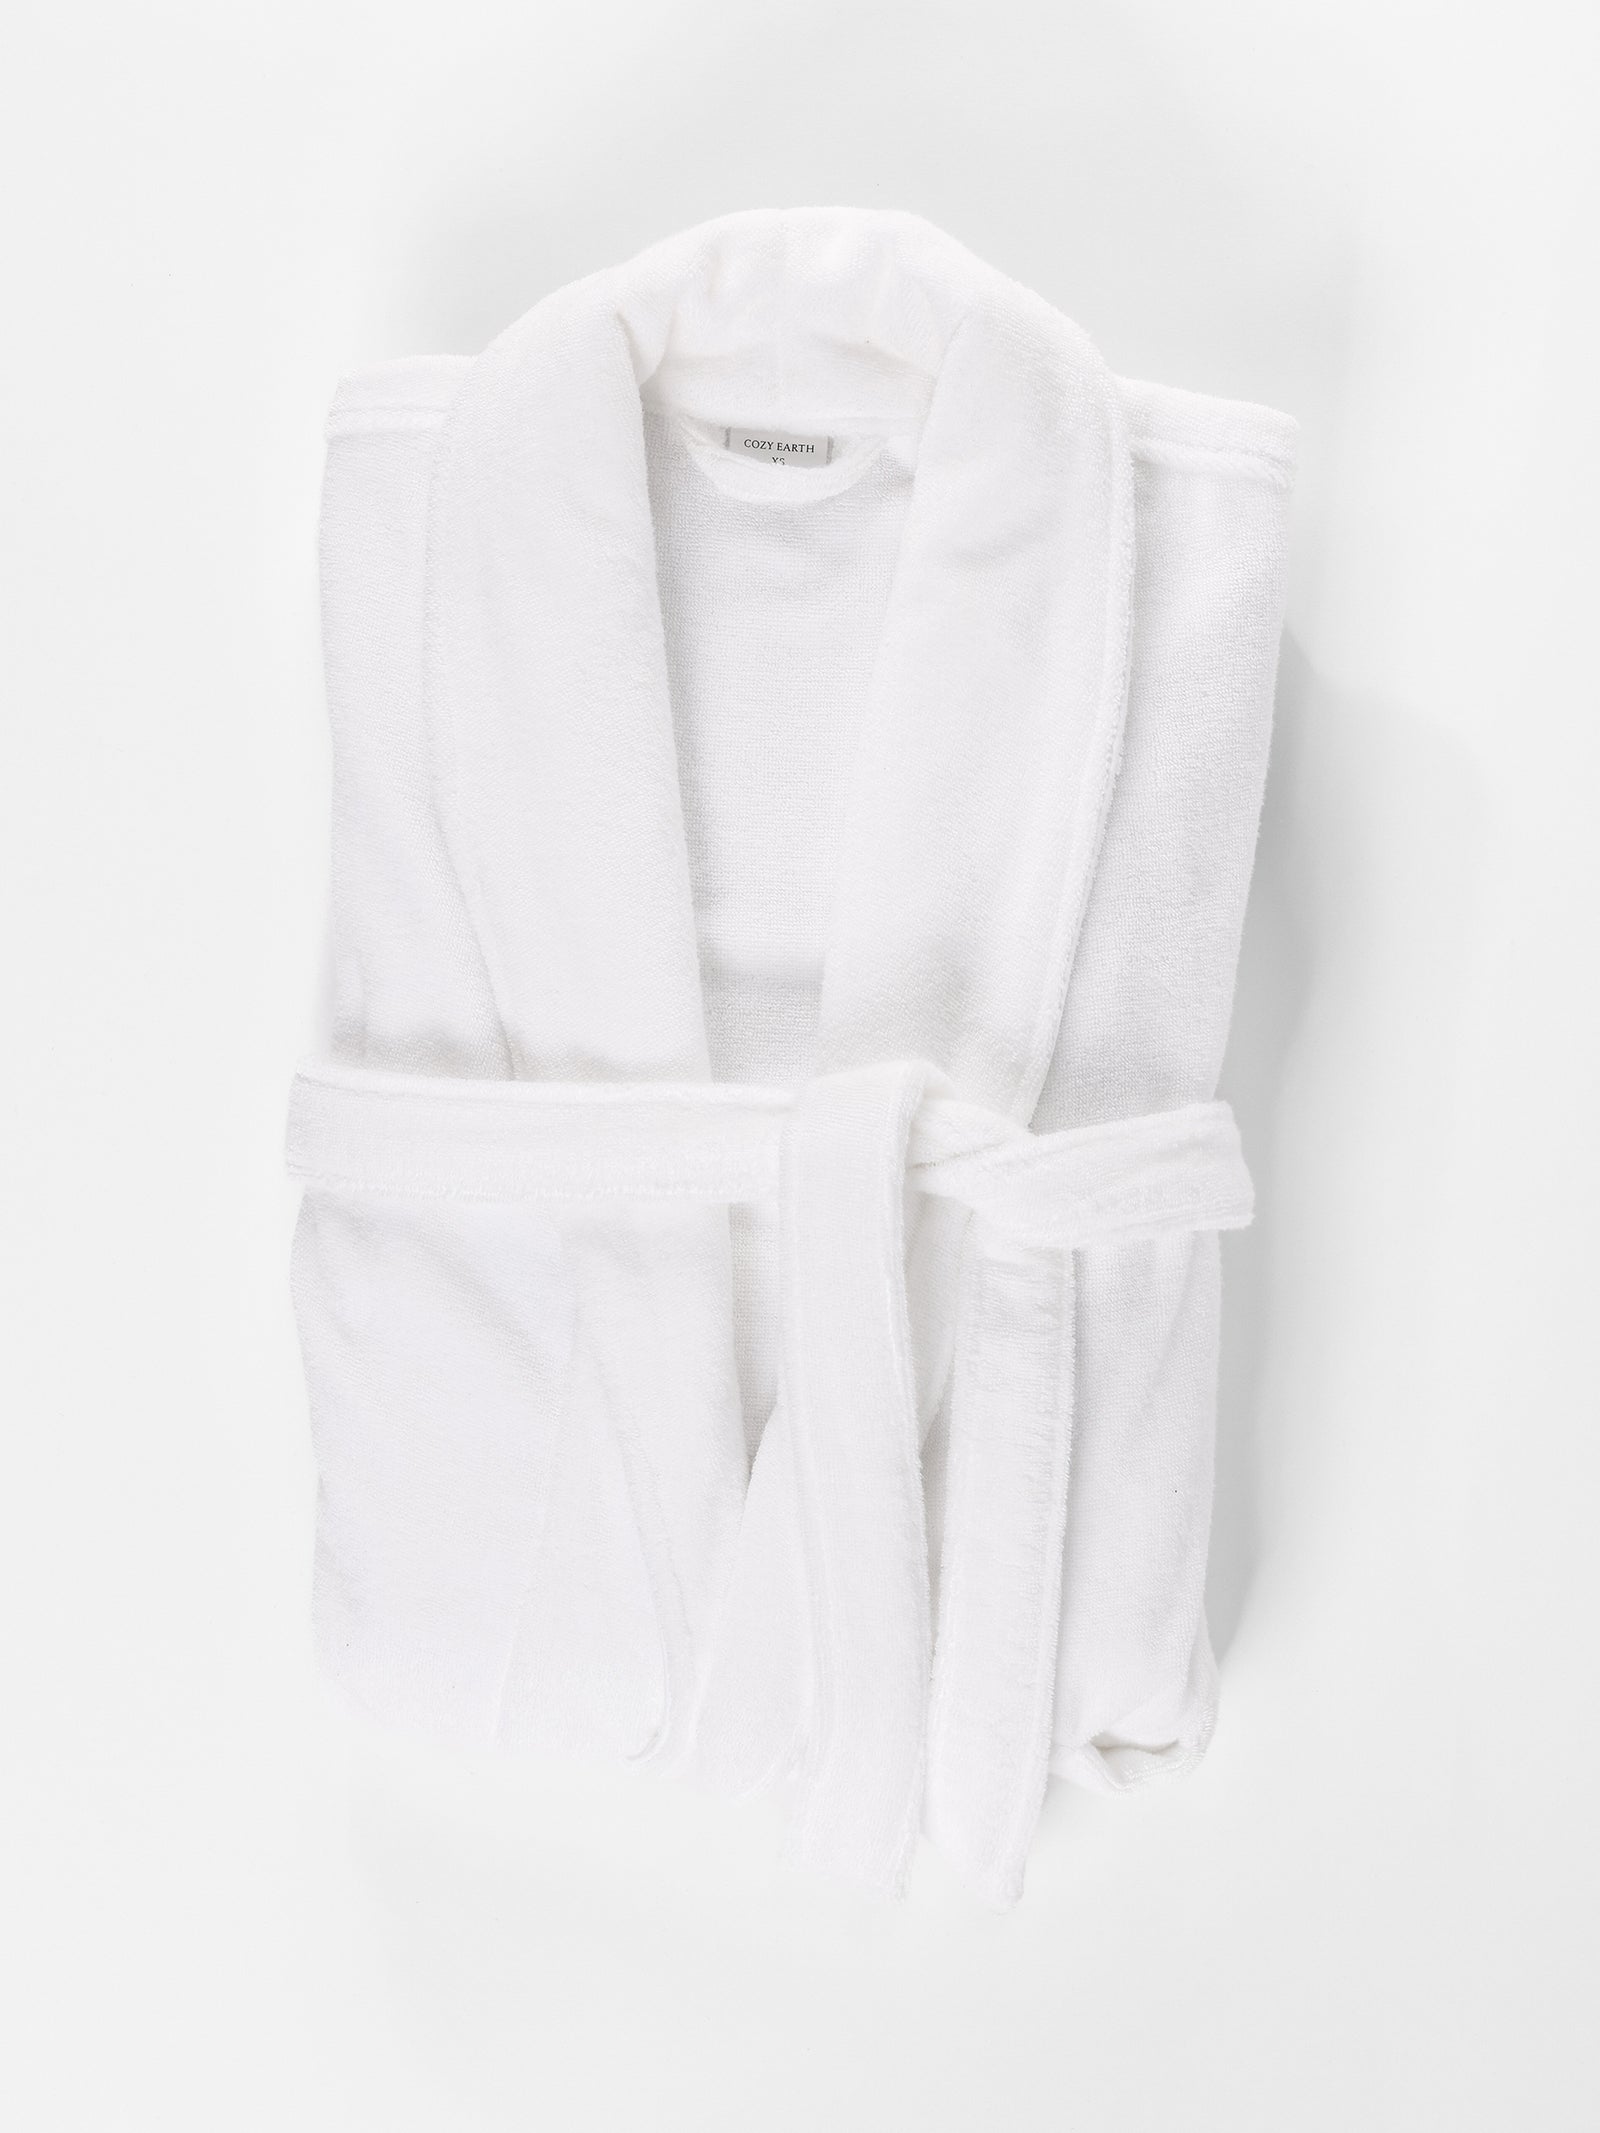 White bath robe folded with white background 